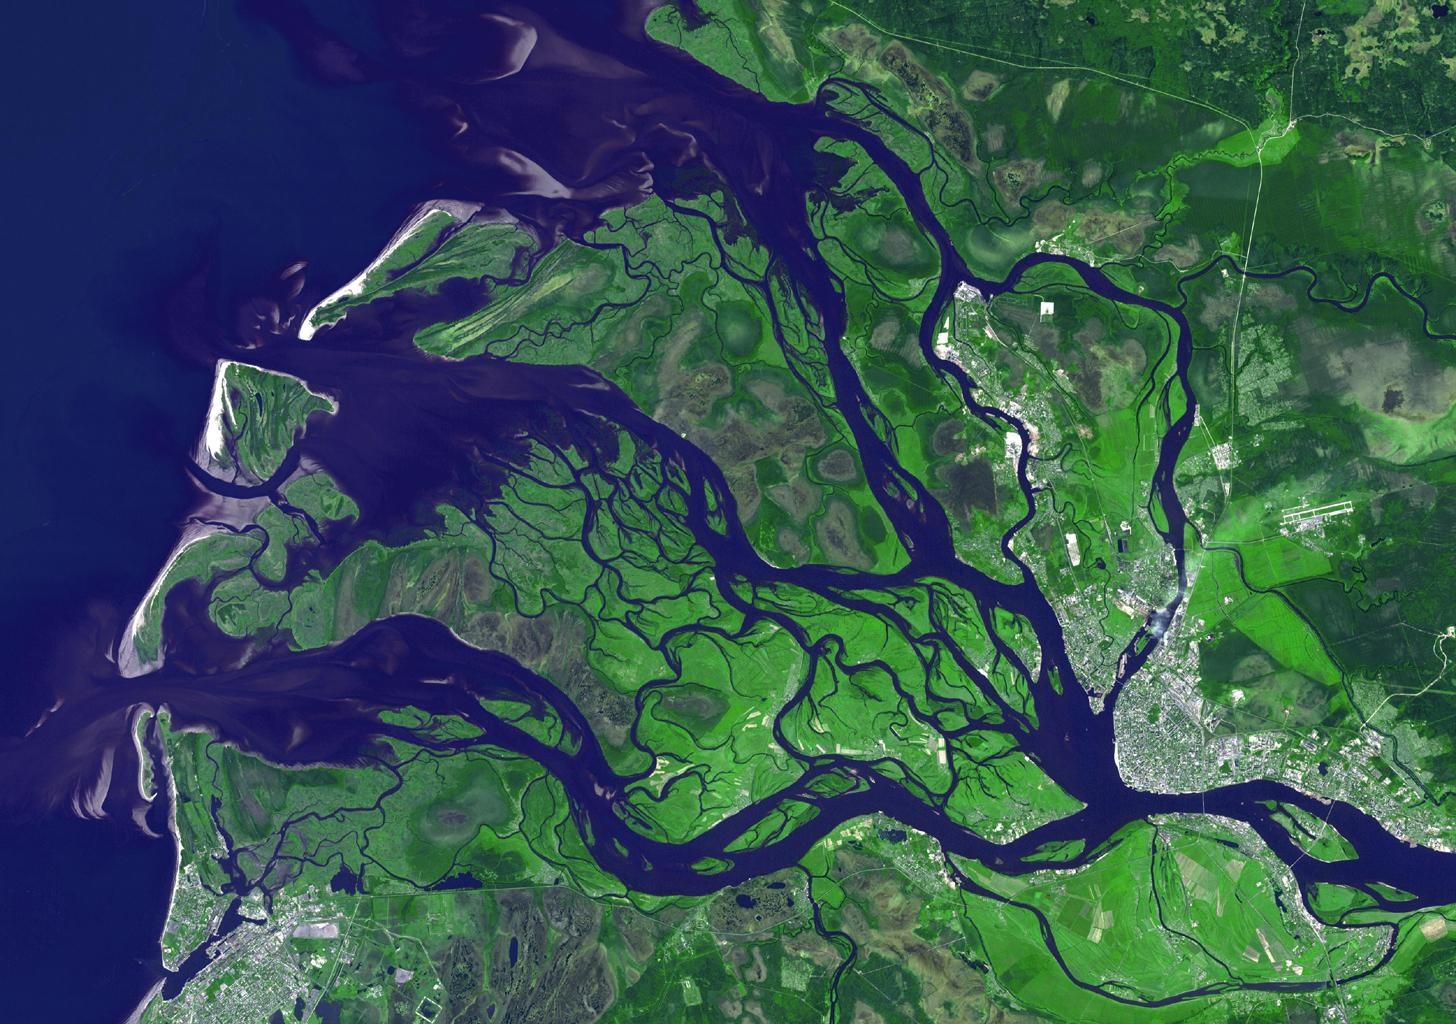 река волга фото из космоса